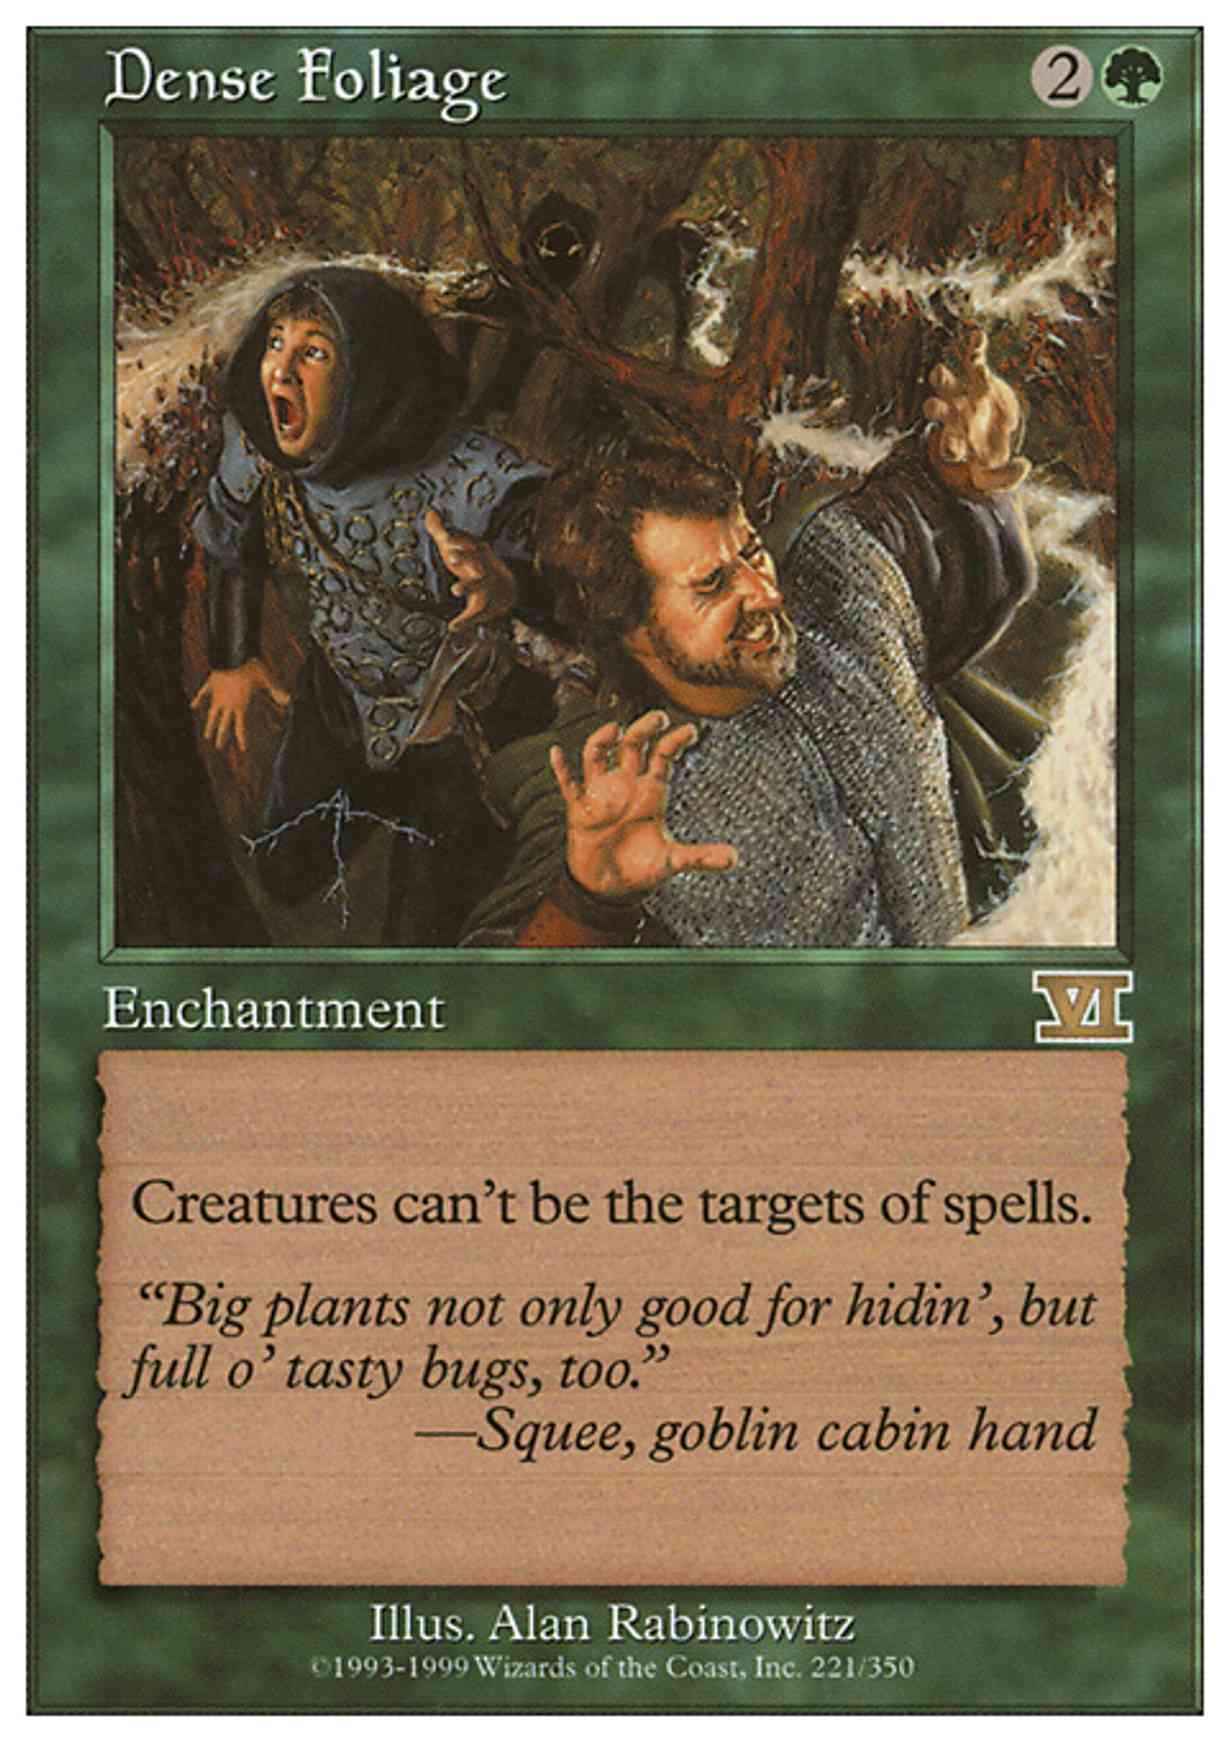 Dense Foliage magic card front